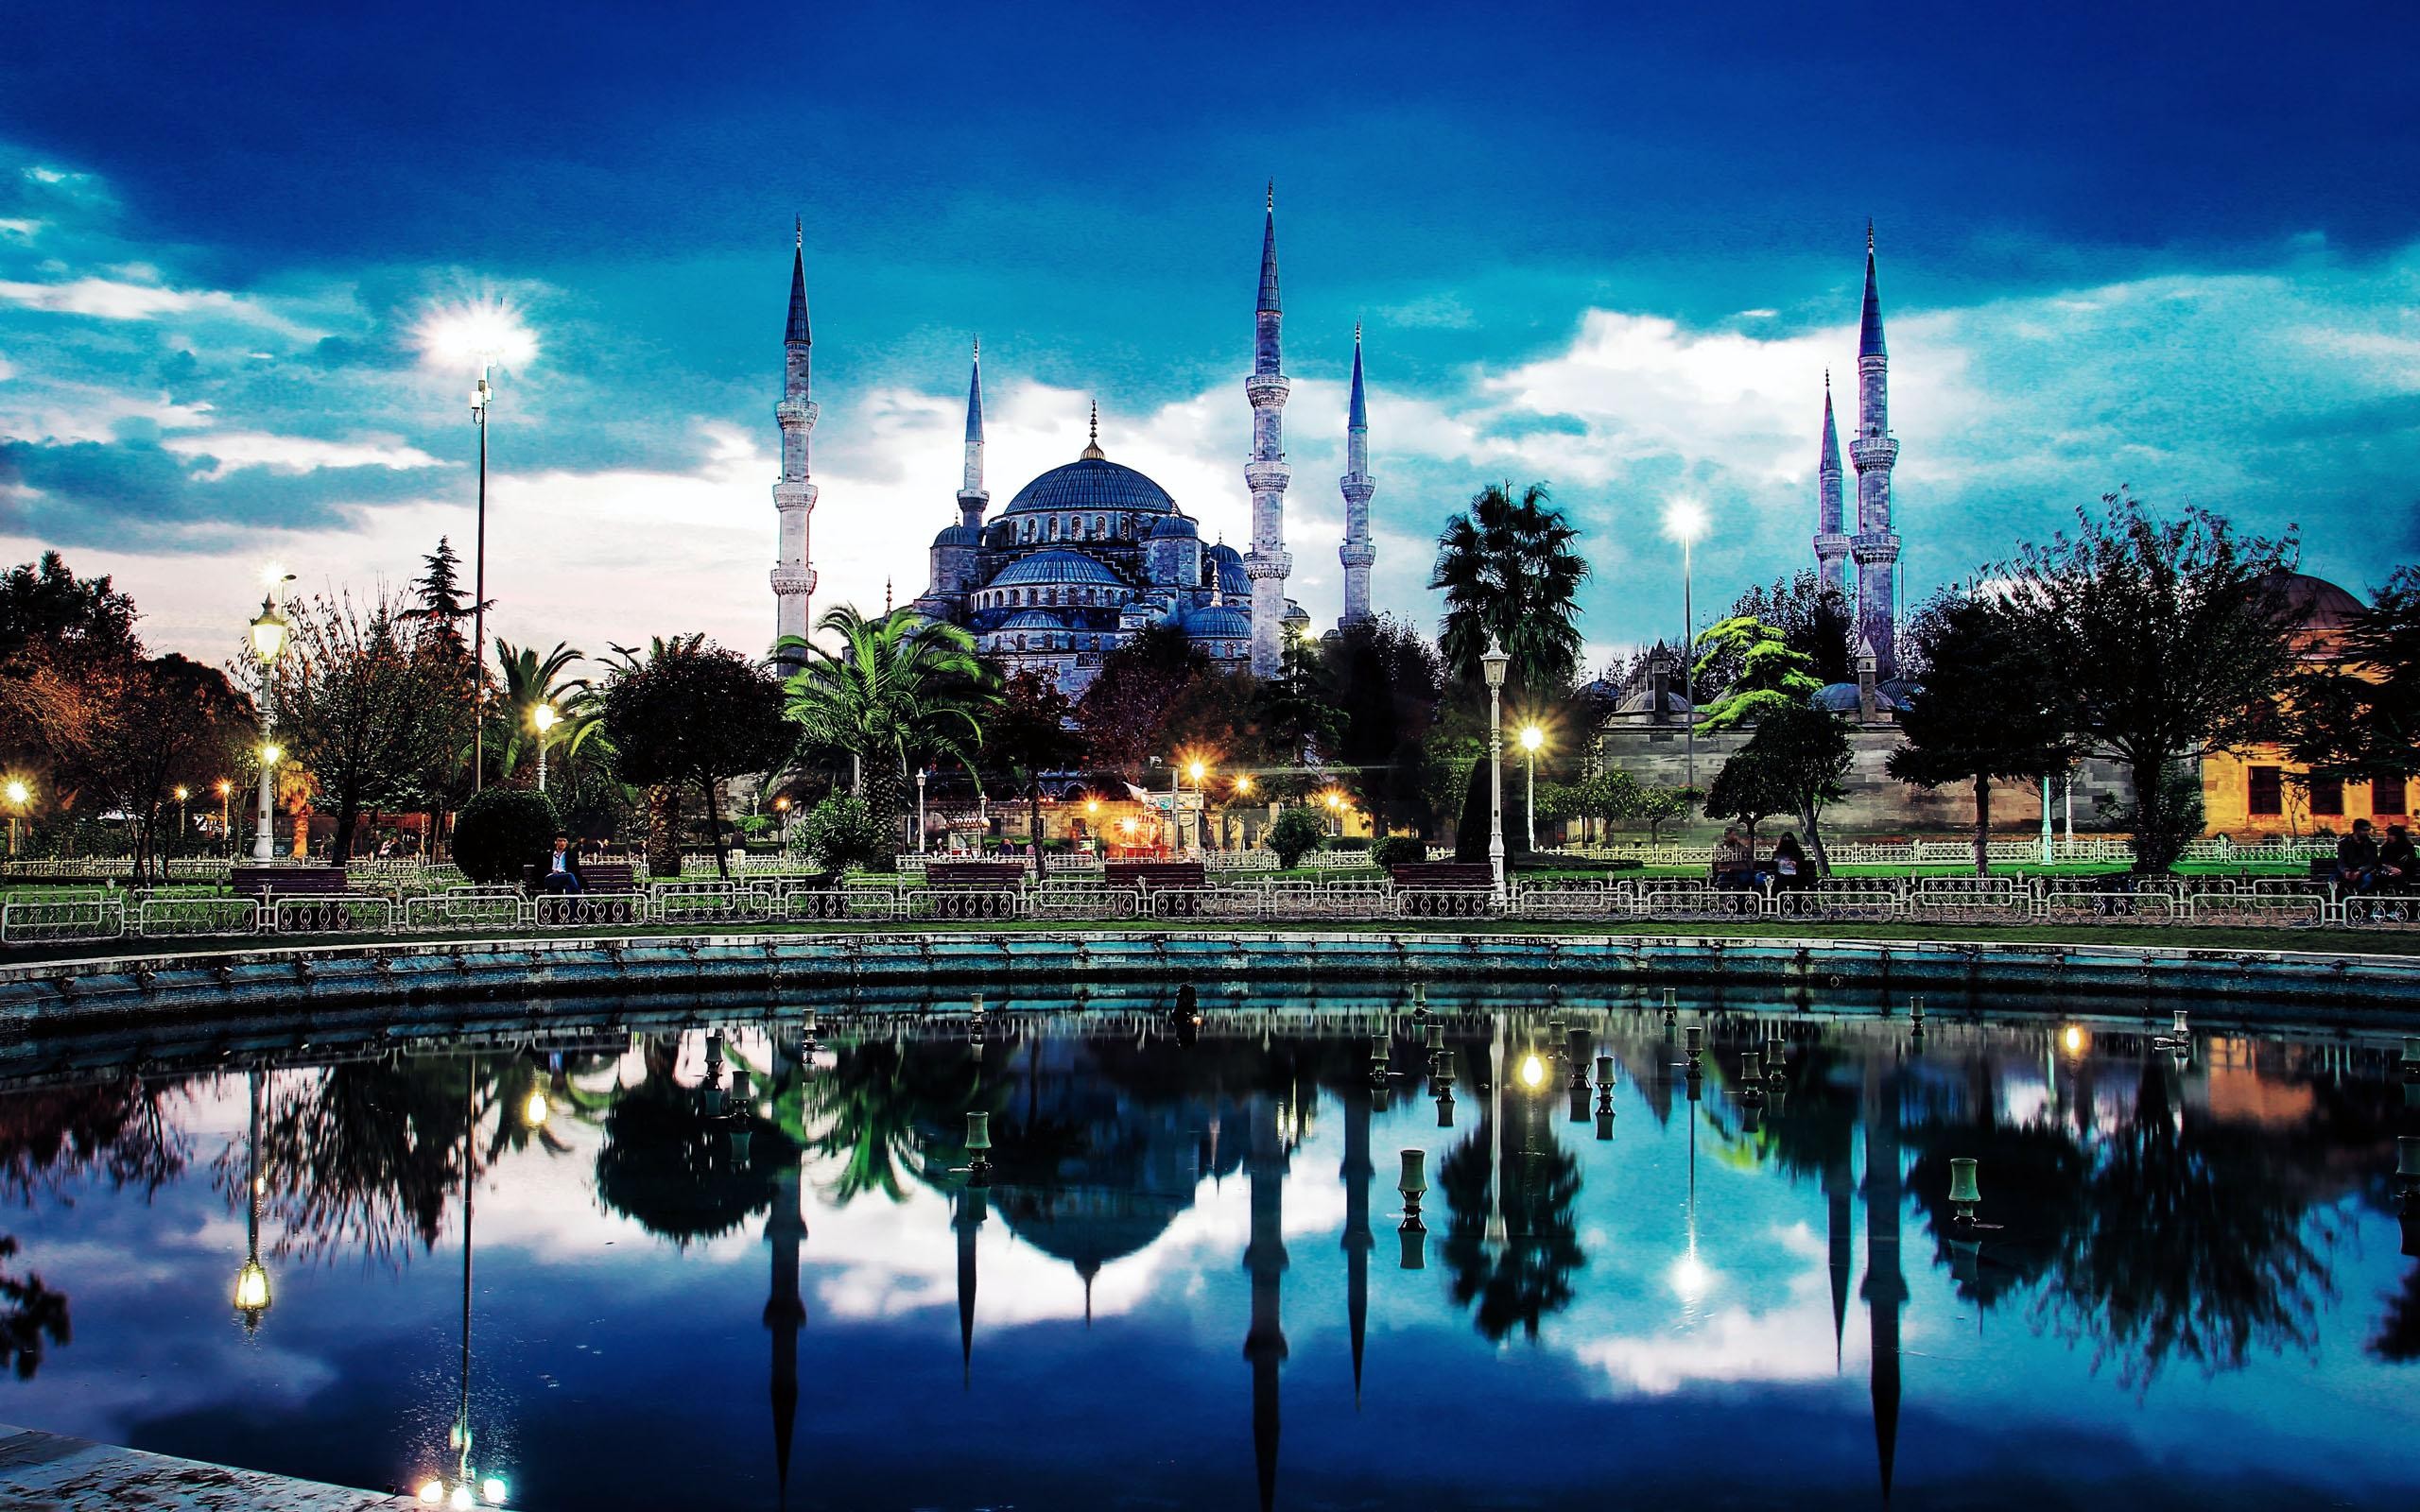 Ютуб стамбул. Мечеть Султанахмет. Г Истамбул Турция. Стамбул Турция голубая мечеть в сумерках. Анкара голубая мечеть.